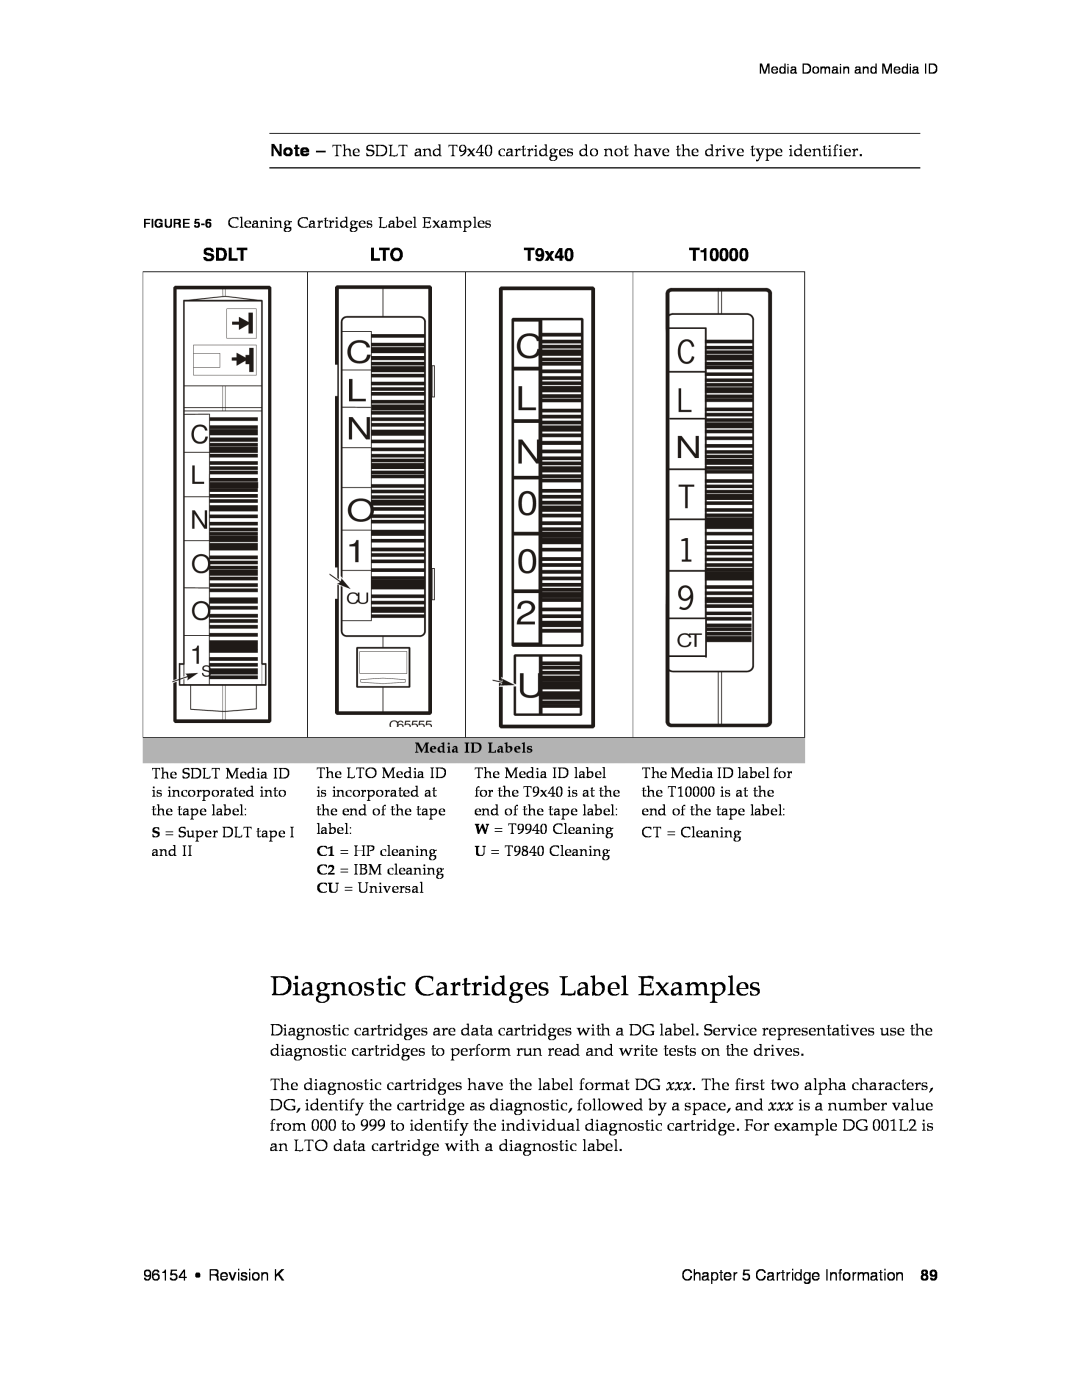 Sun Microsystems SL8500 manual Diagnostic Cartridges Label Examples, C L N O O 1S, Sdlt, T9x40, T10000 